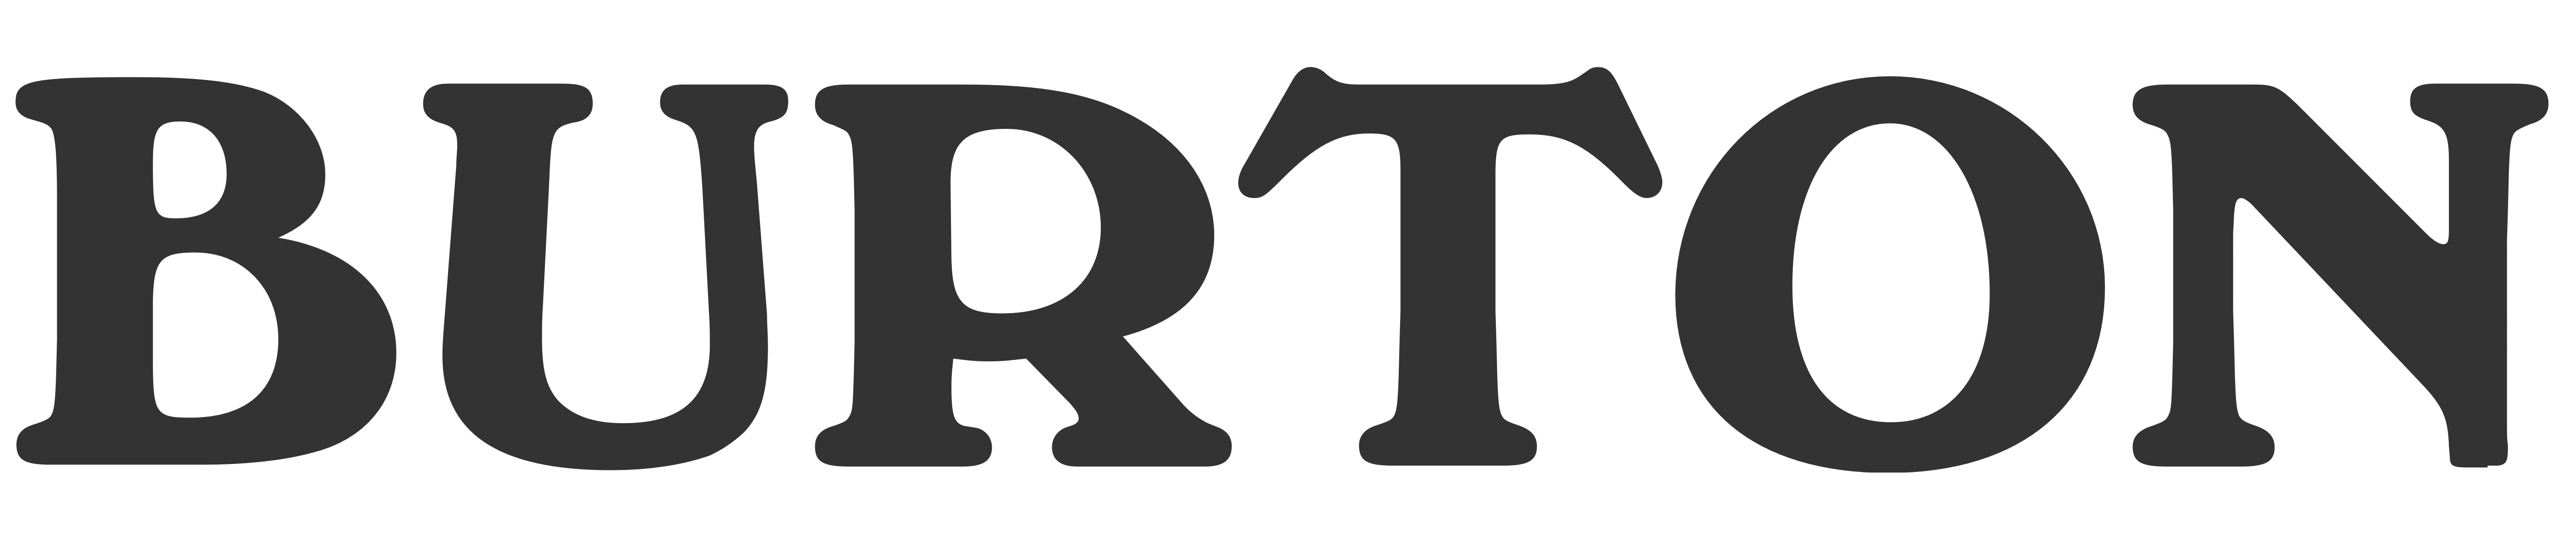 Tim Burton Logo Png, Transpar